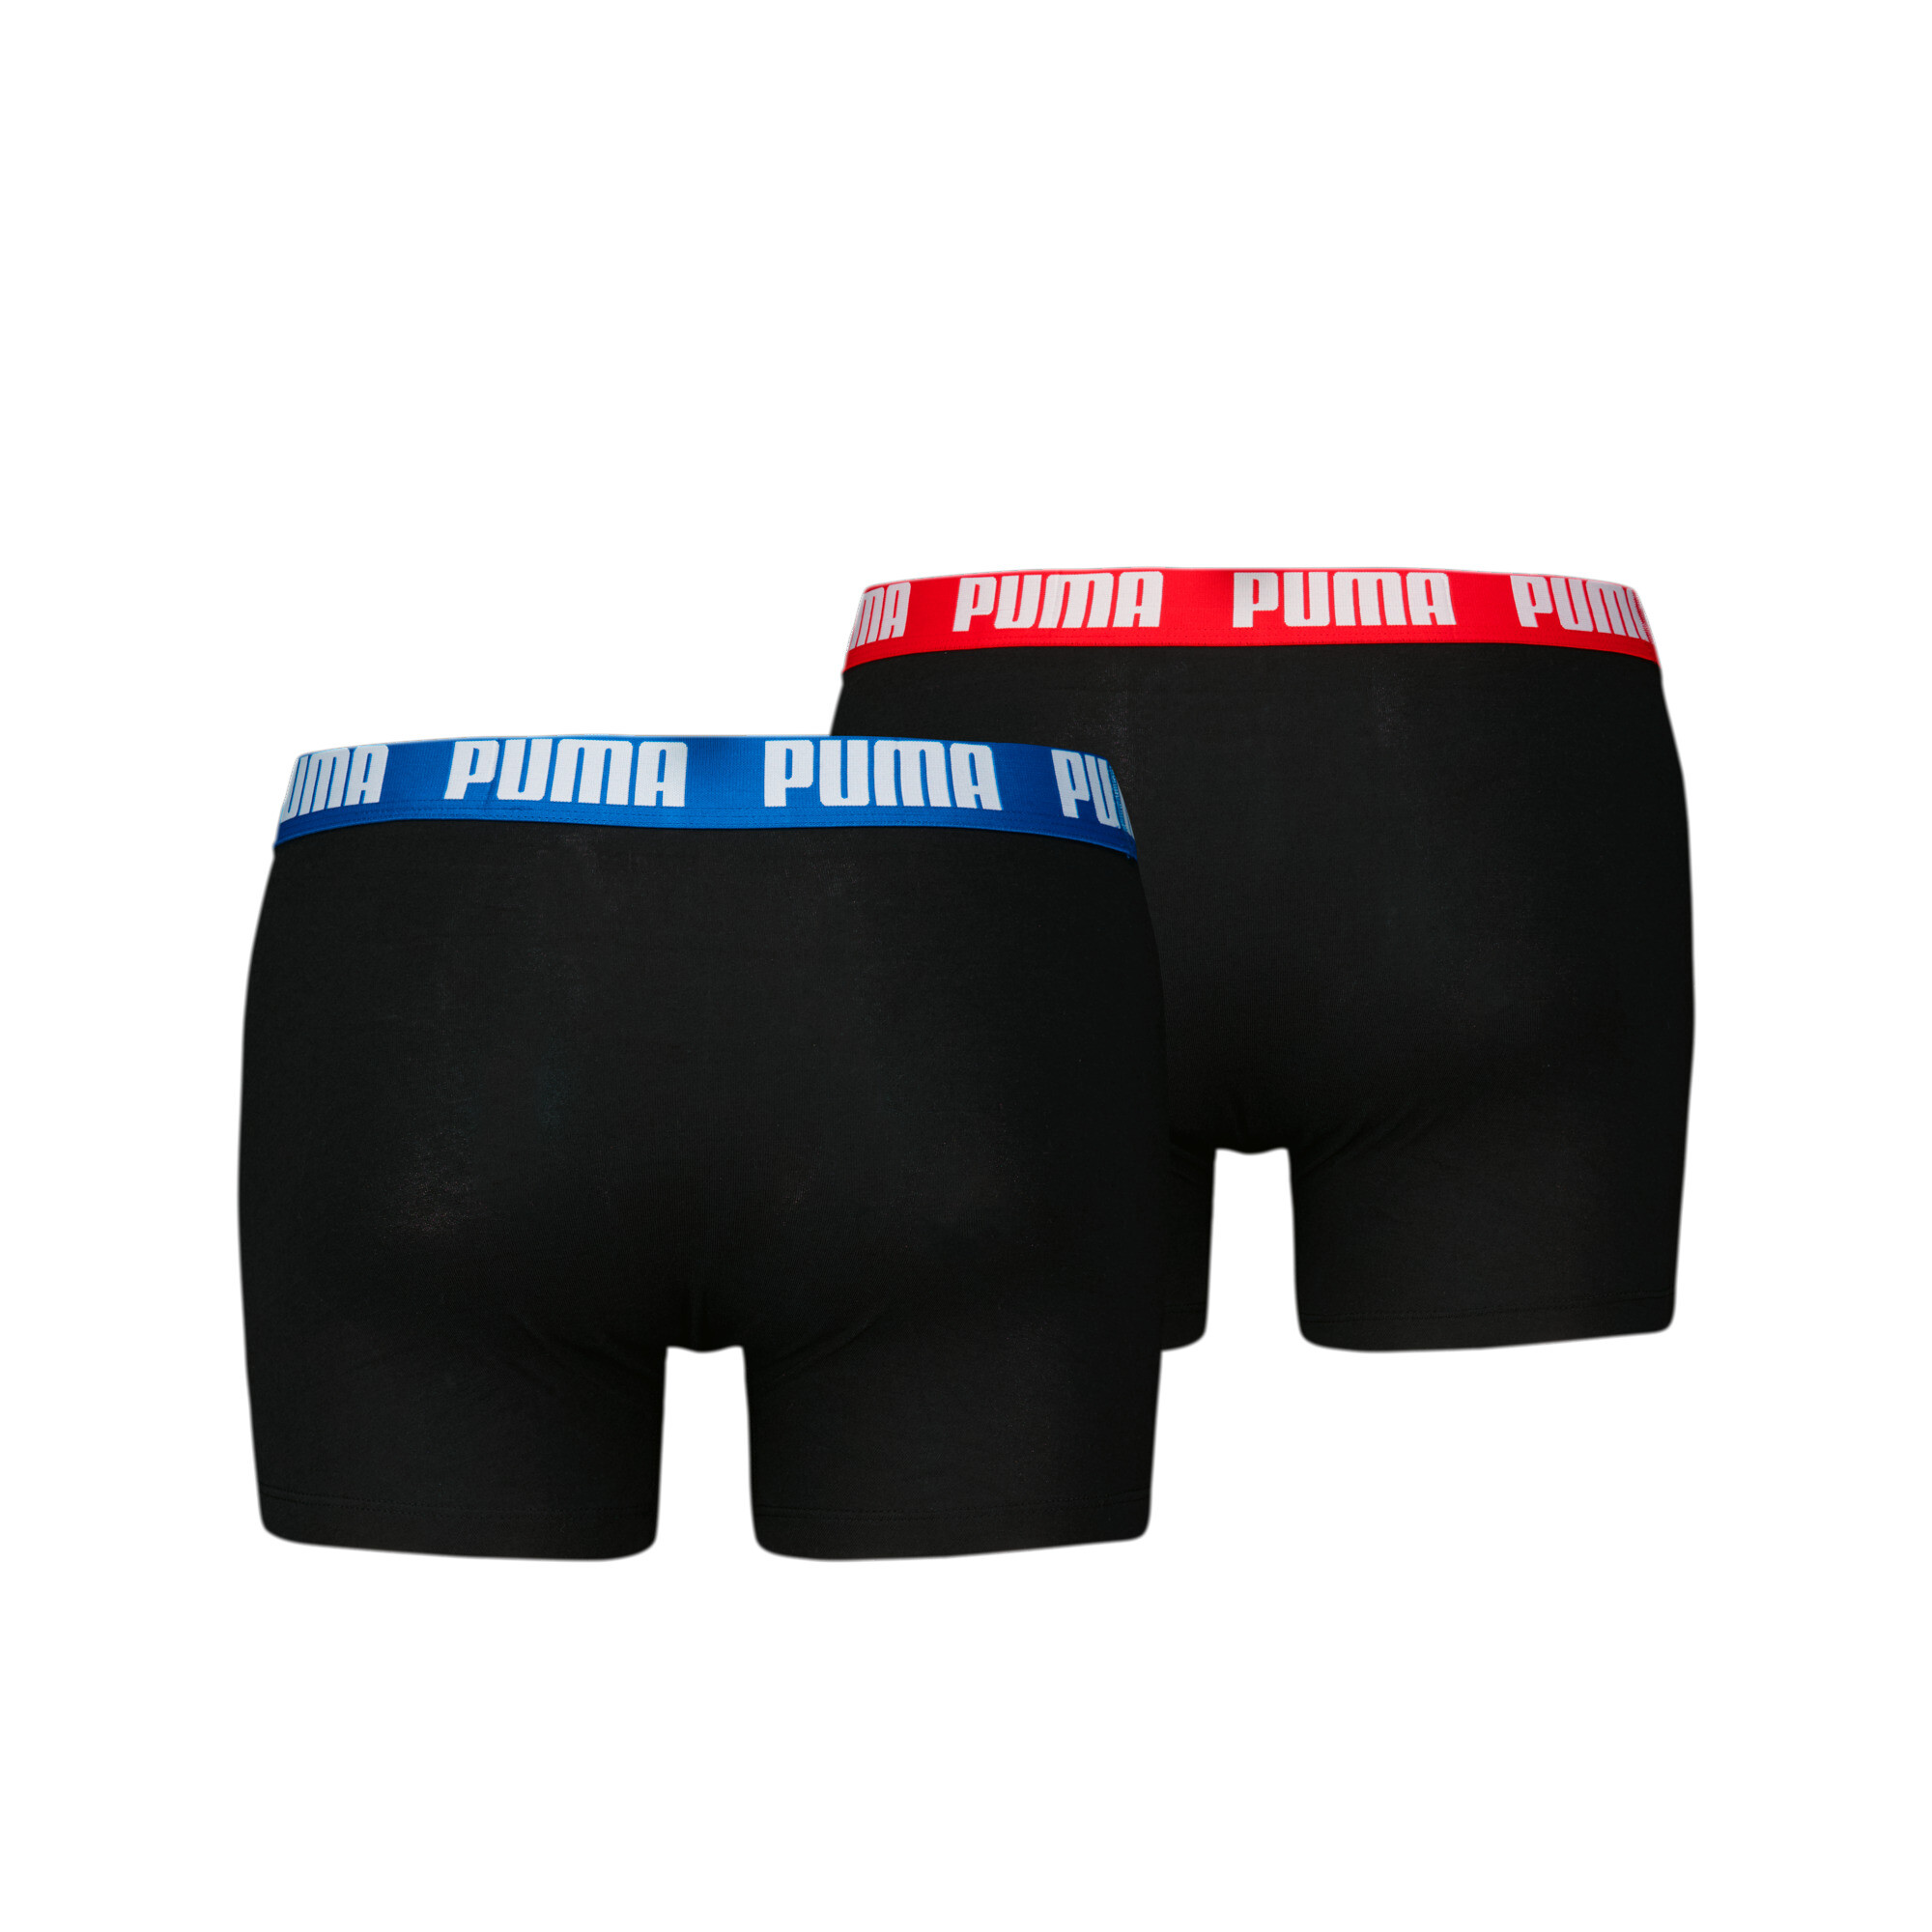 Men's Puma's Boxer Briefs 2 Pack, Black, Clothing